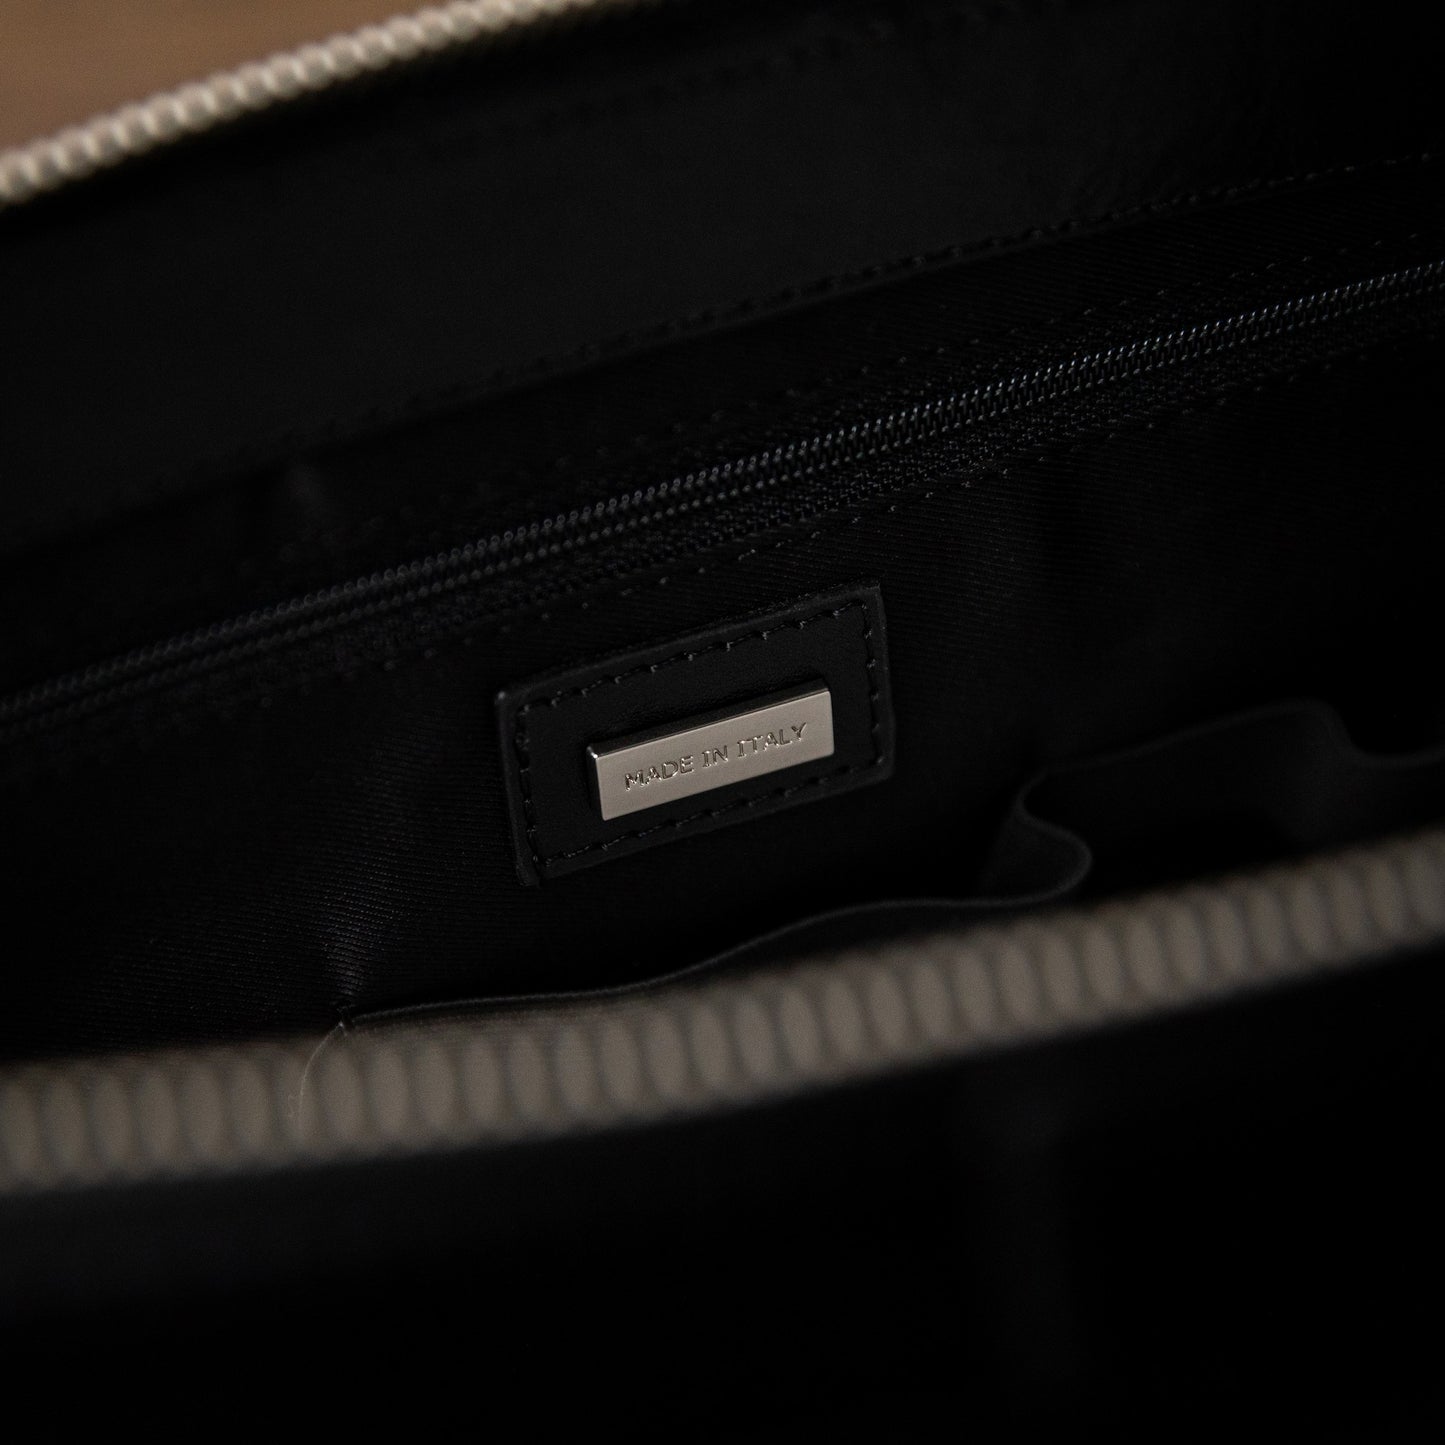 Leather Cosmetic Bag Dopp Kit - Ragtime